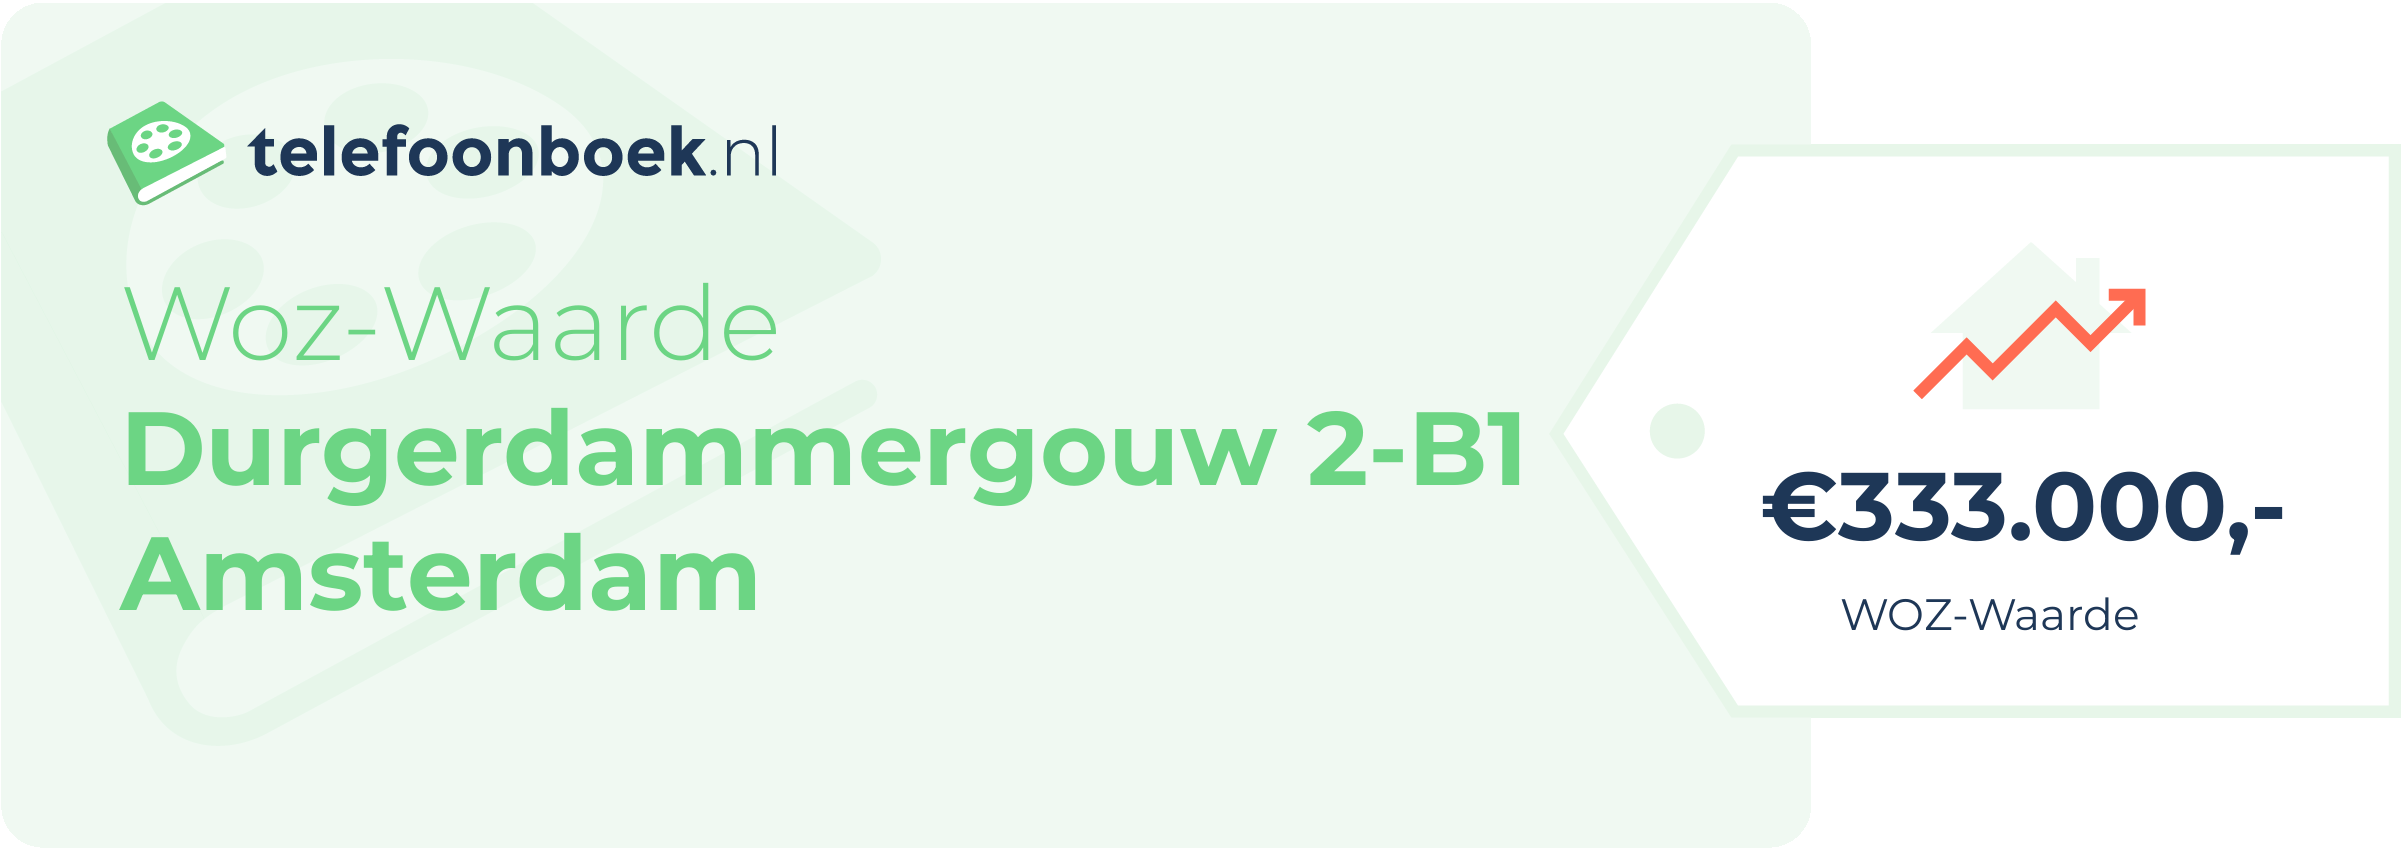 WOZ-waarde Durgerdammergouw 2-B1 Amsterdam